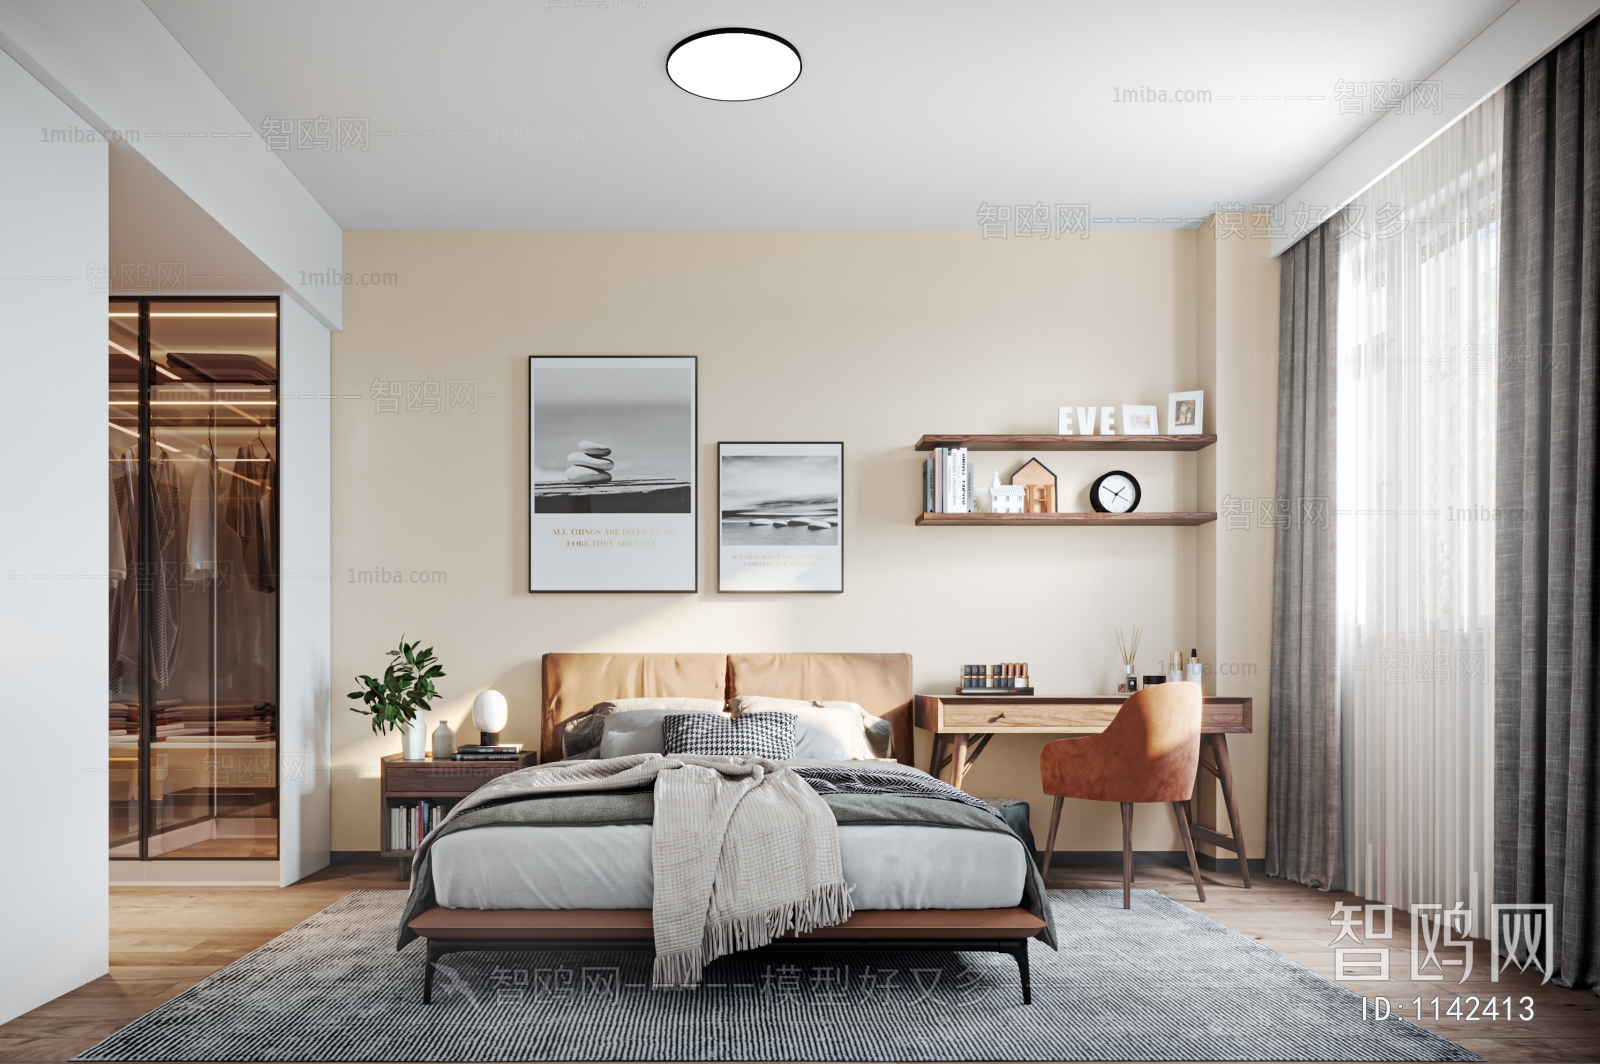 Nordic Style Bedroom